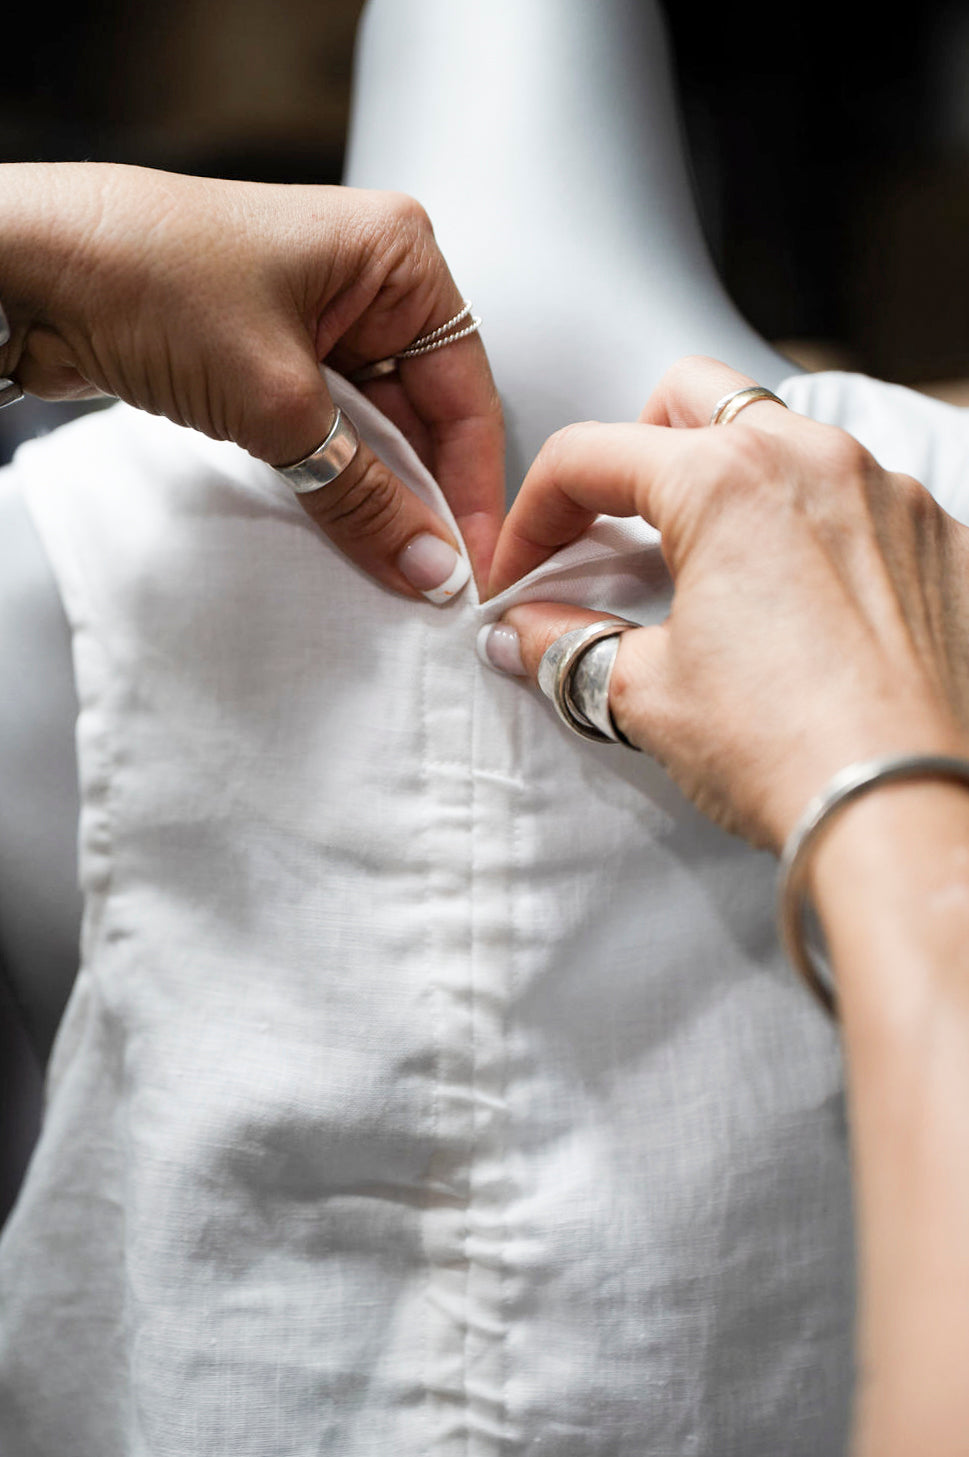 Close-up of hands buttoning up a white linen shirt, showcasing craftsmanship